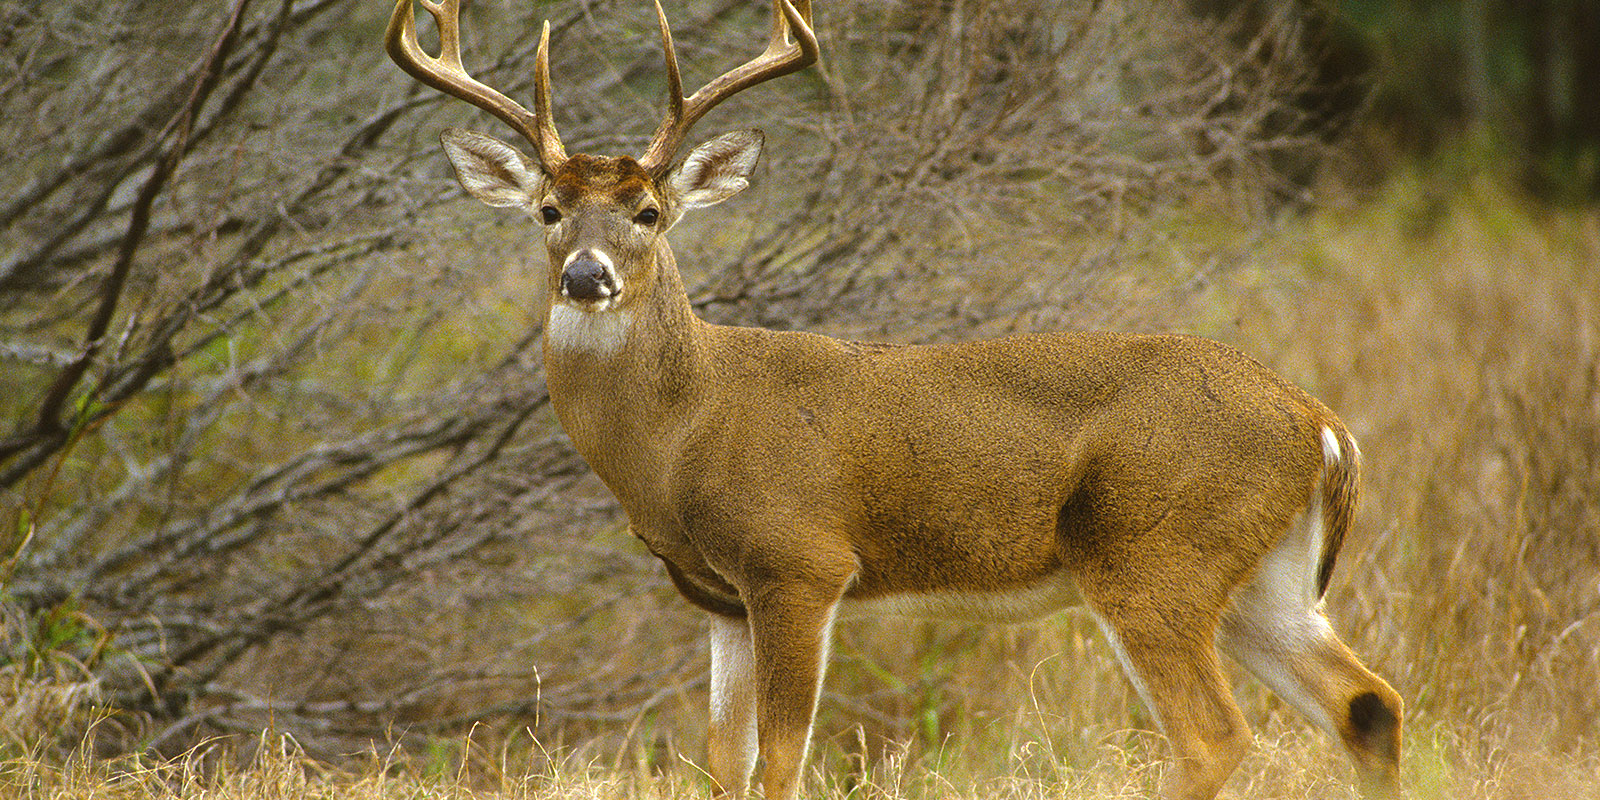 Image of a deer in Texas